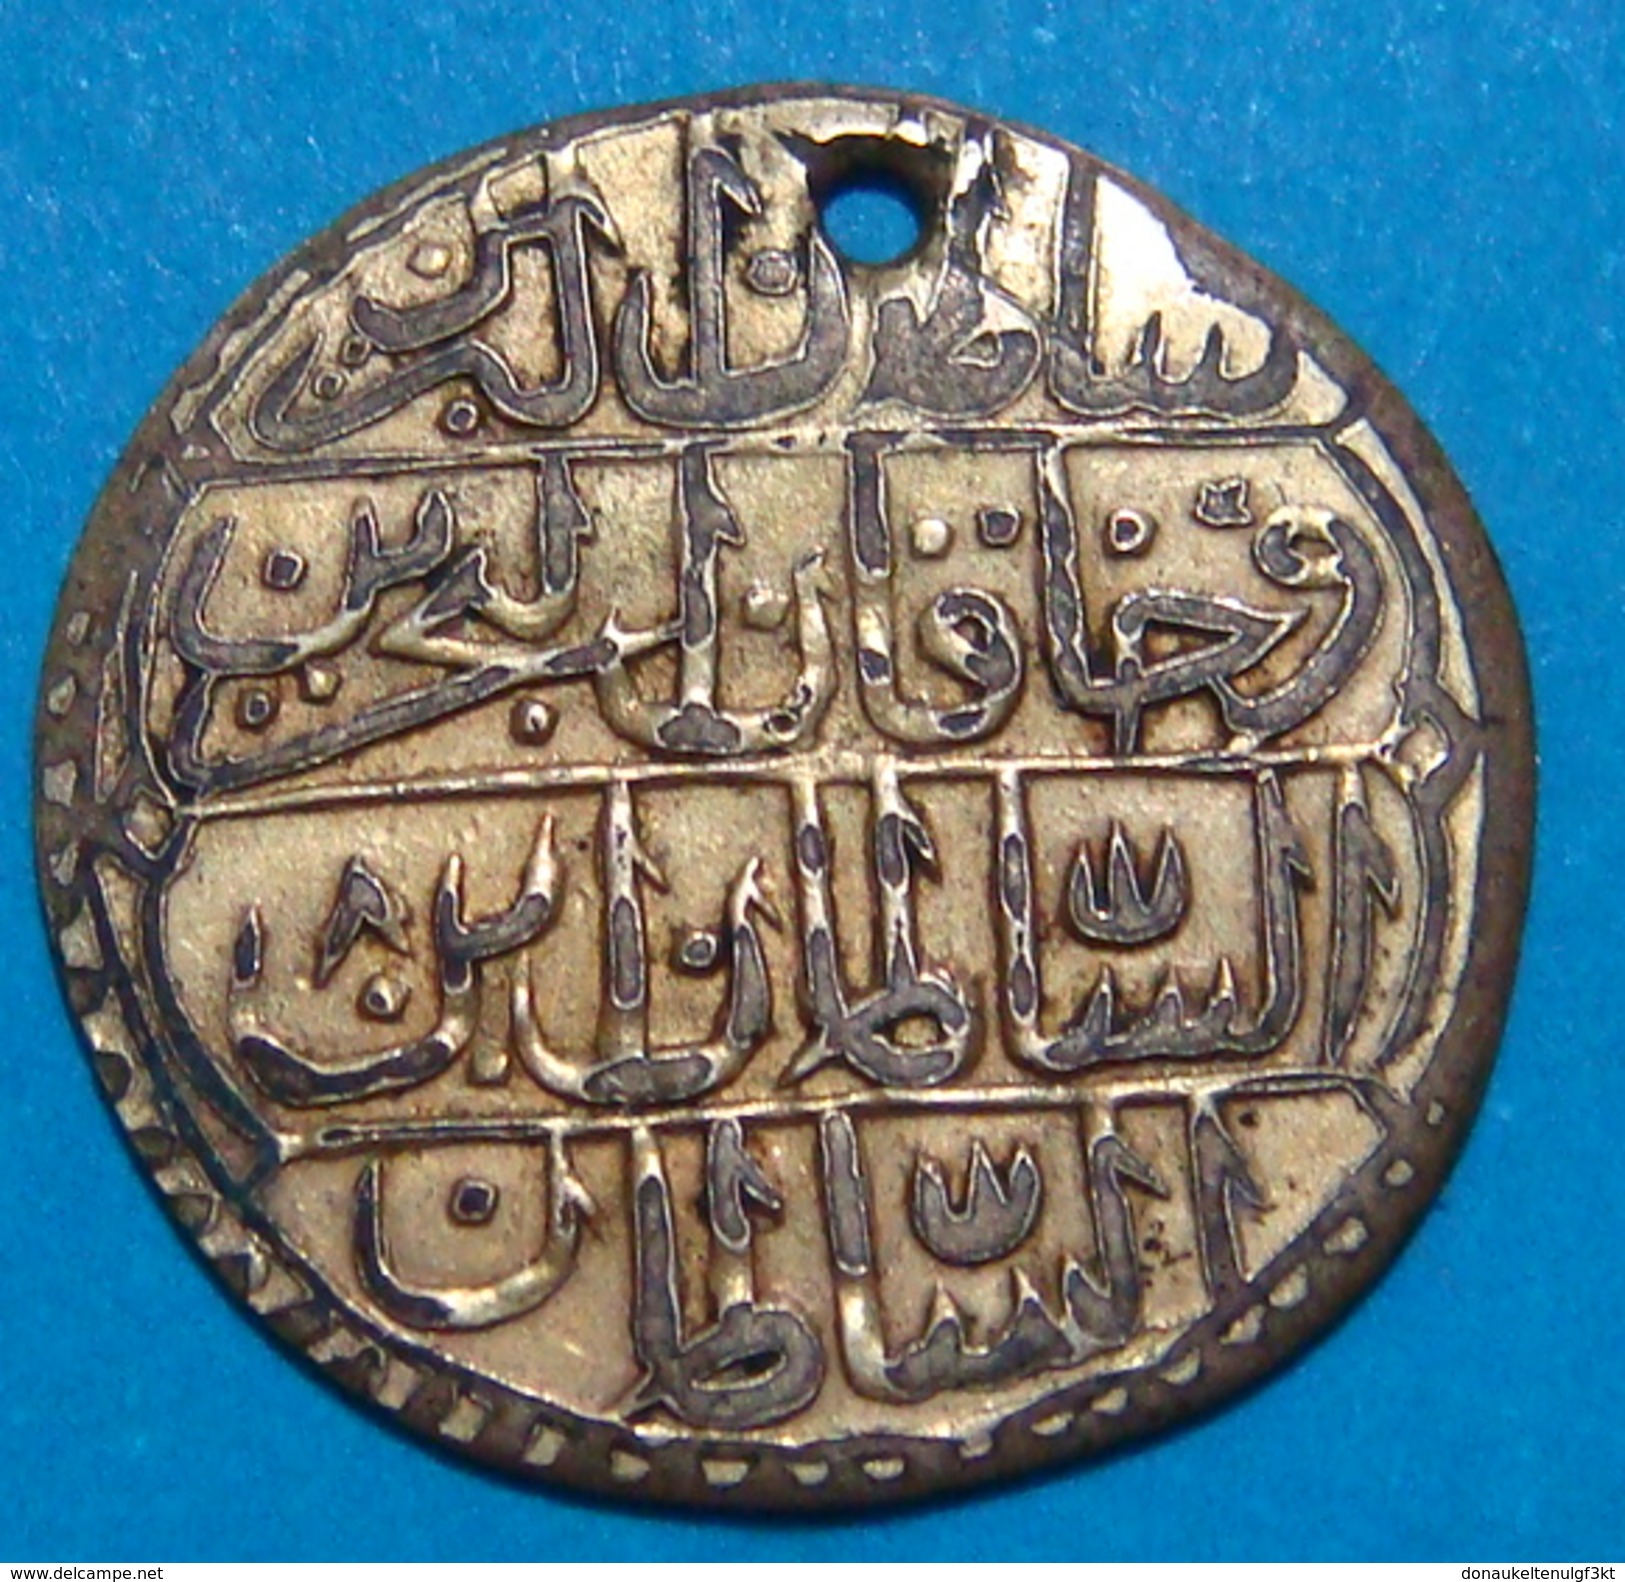 TURKEY OTTOMAN ZERI MAHBUB 1203 Year 8, OFFICIAL RESTRIKE OR PROBE, VERY RARE OR UNIQUE, 1.59 Gr. - Turchia